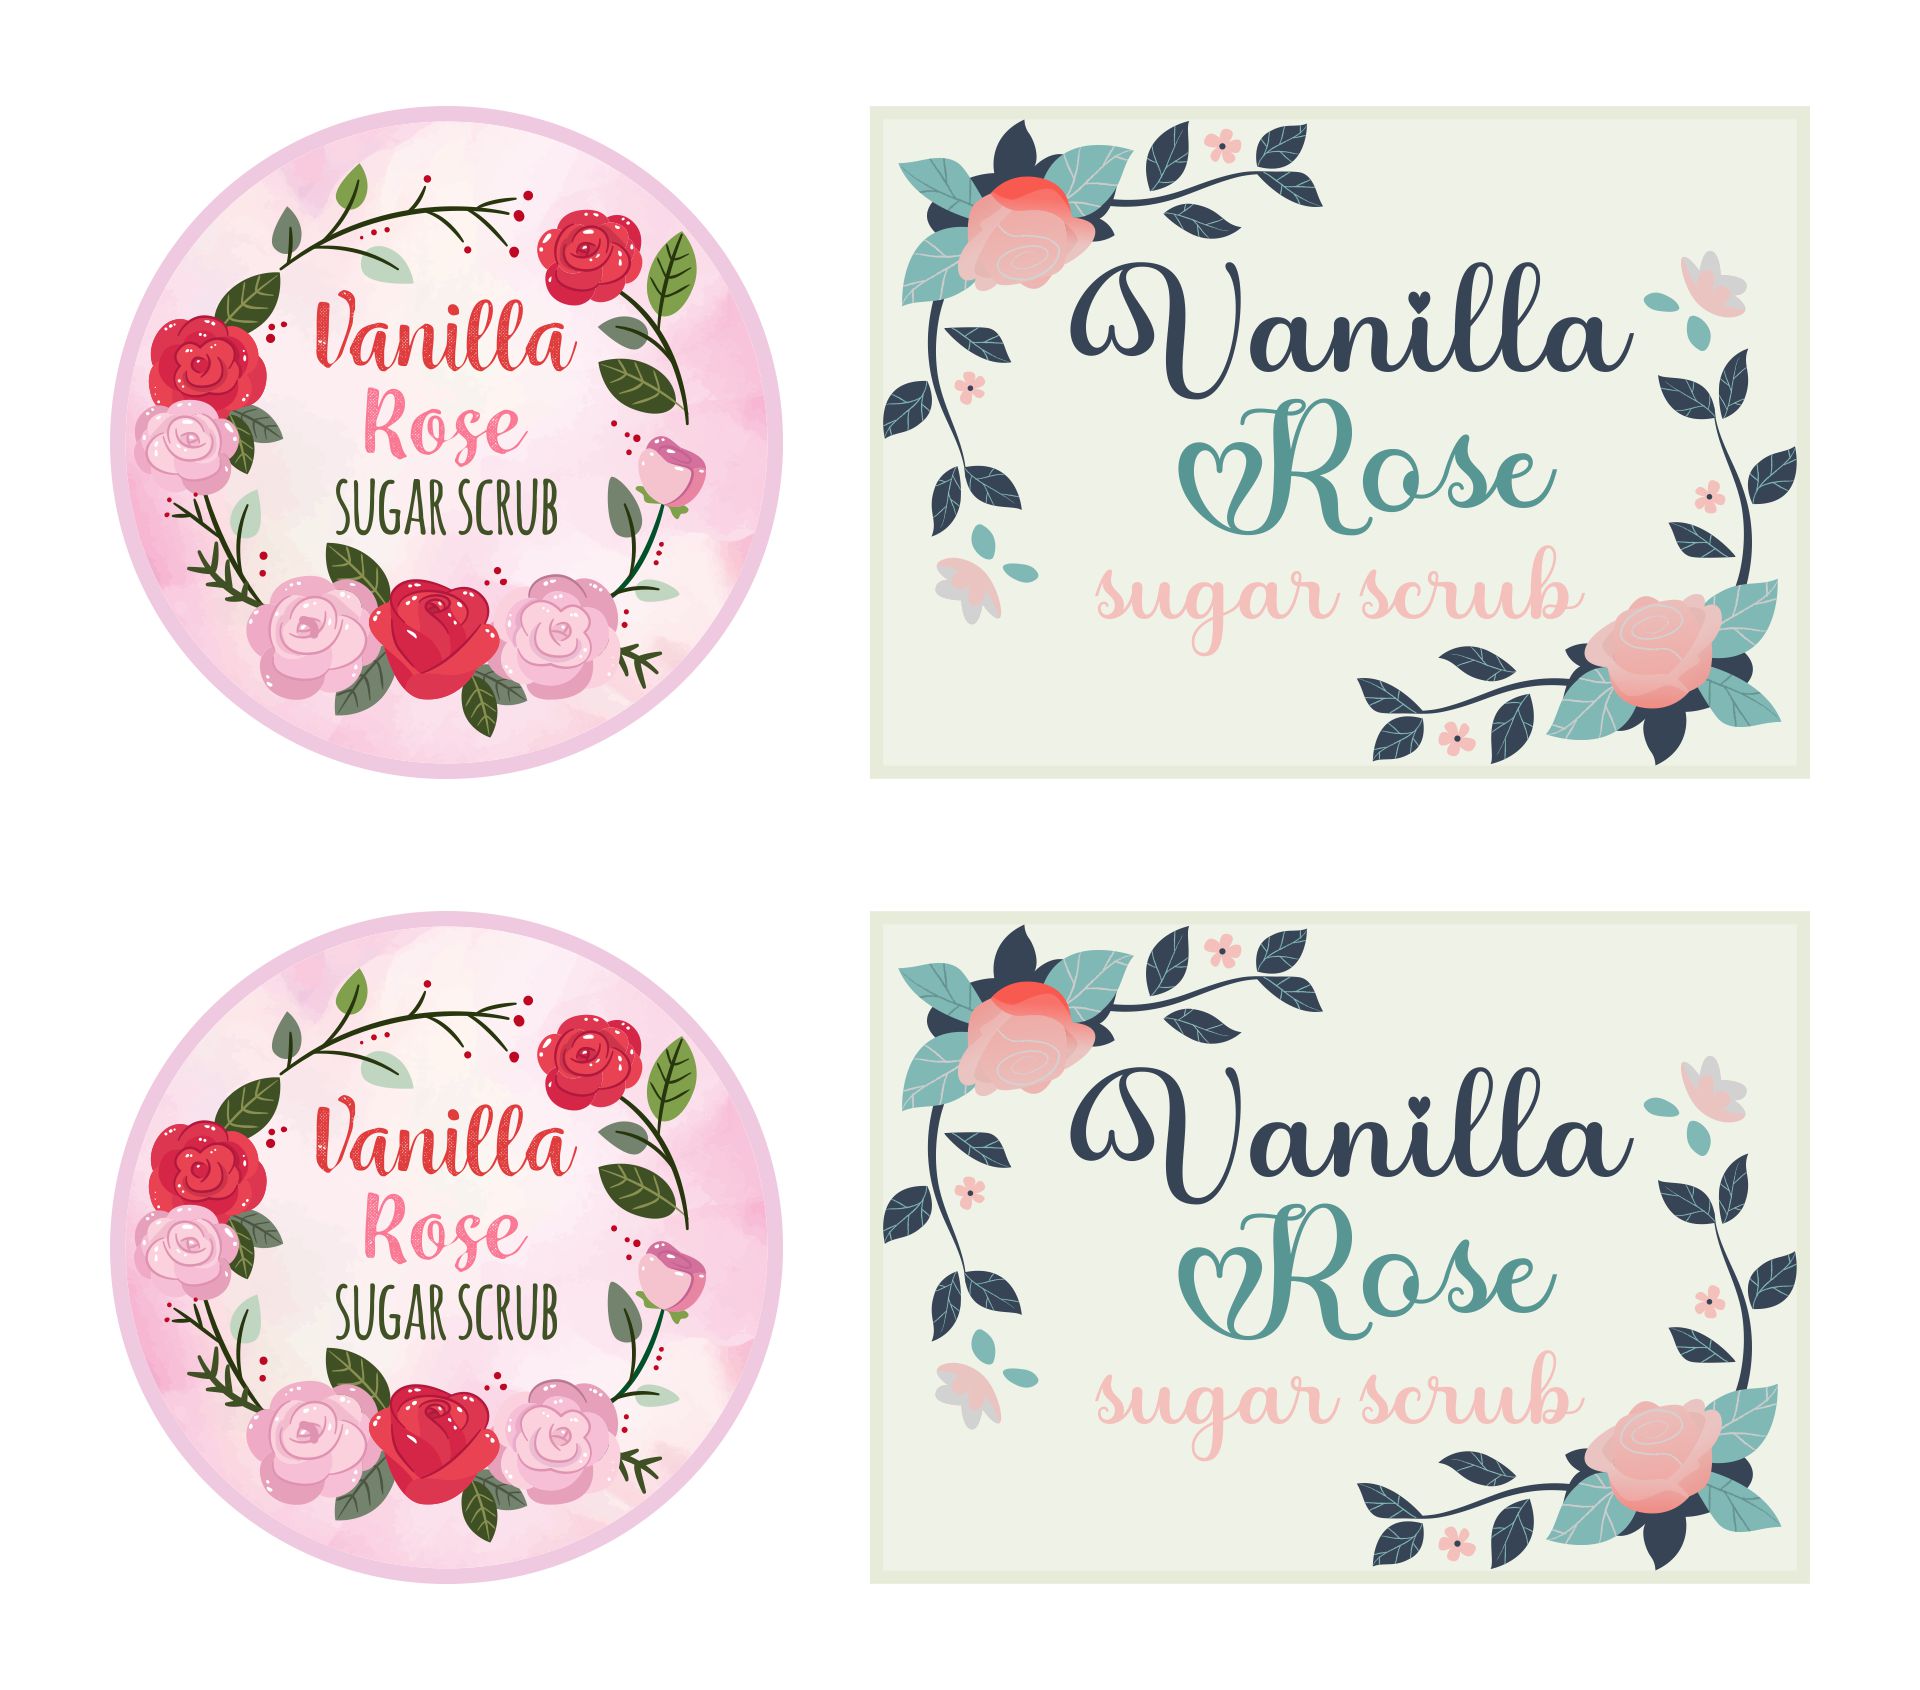 Vanilla Rose Sugar Scrub Labels